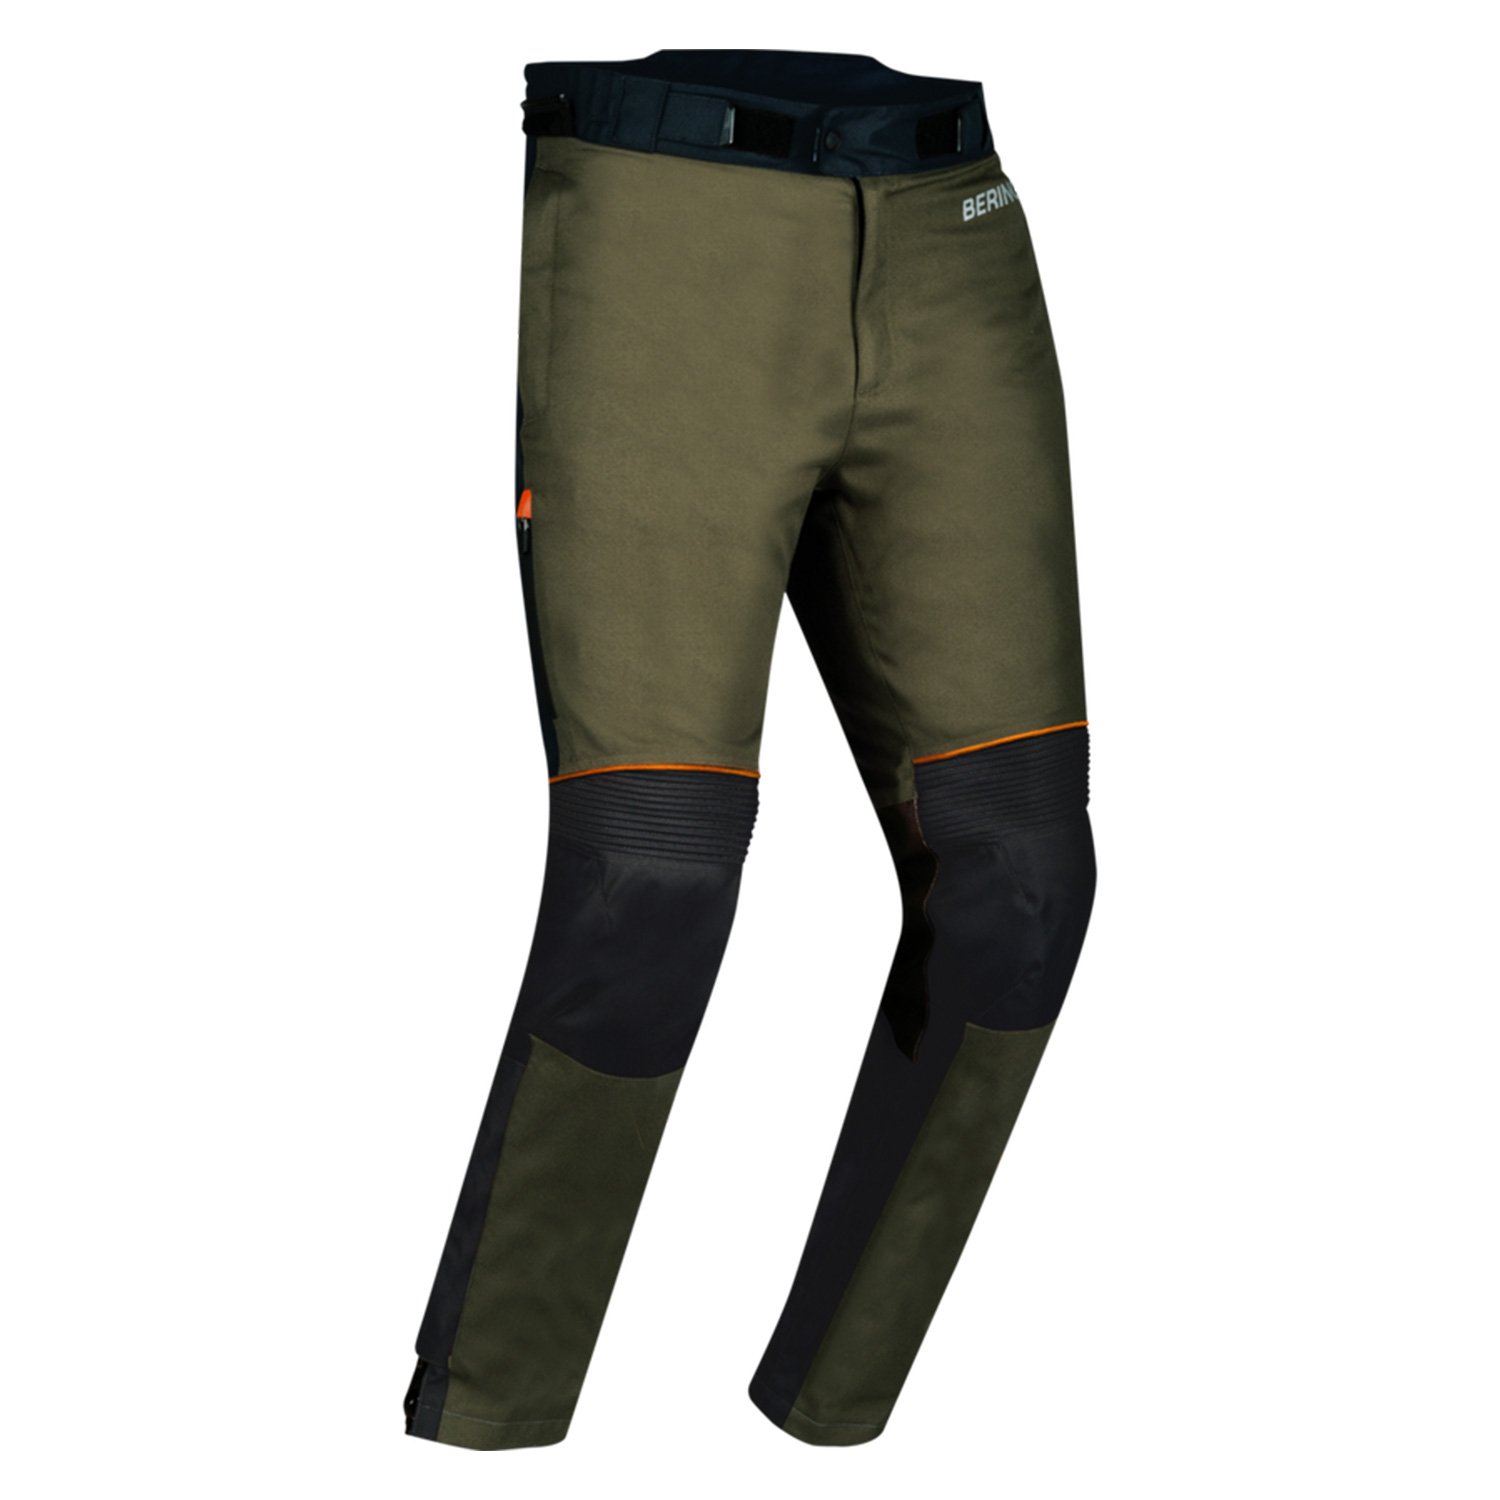 Image of Bering Zephyr Trousers Black Khaki Orange Size S ID 3660815180815